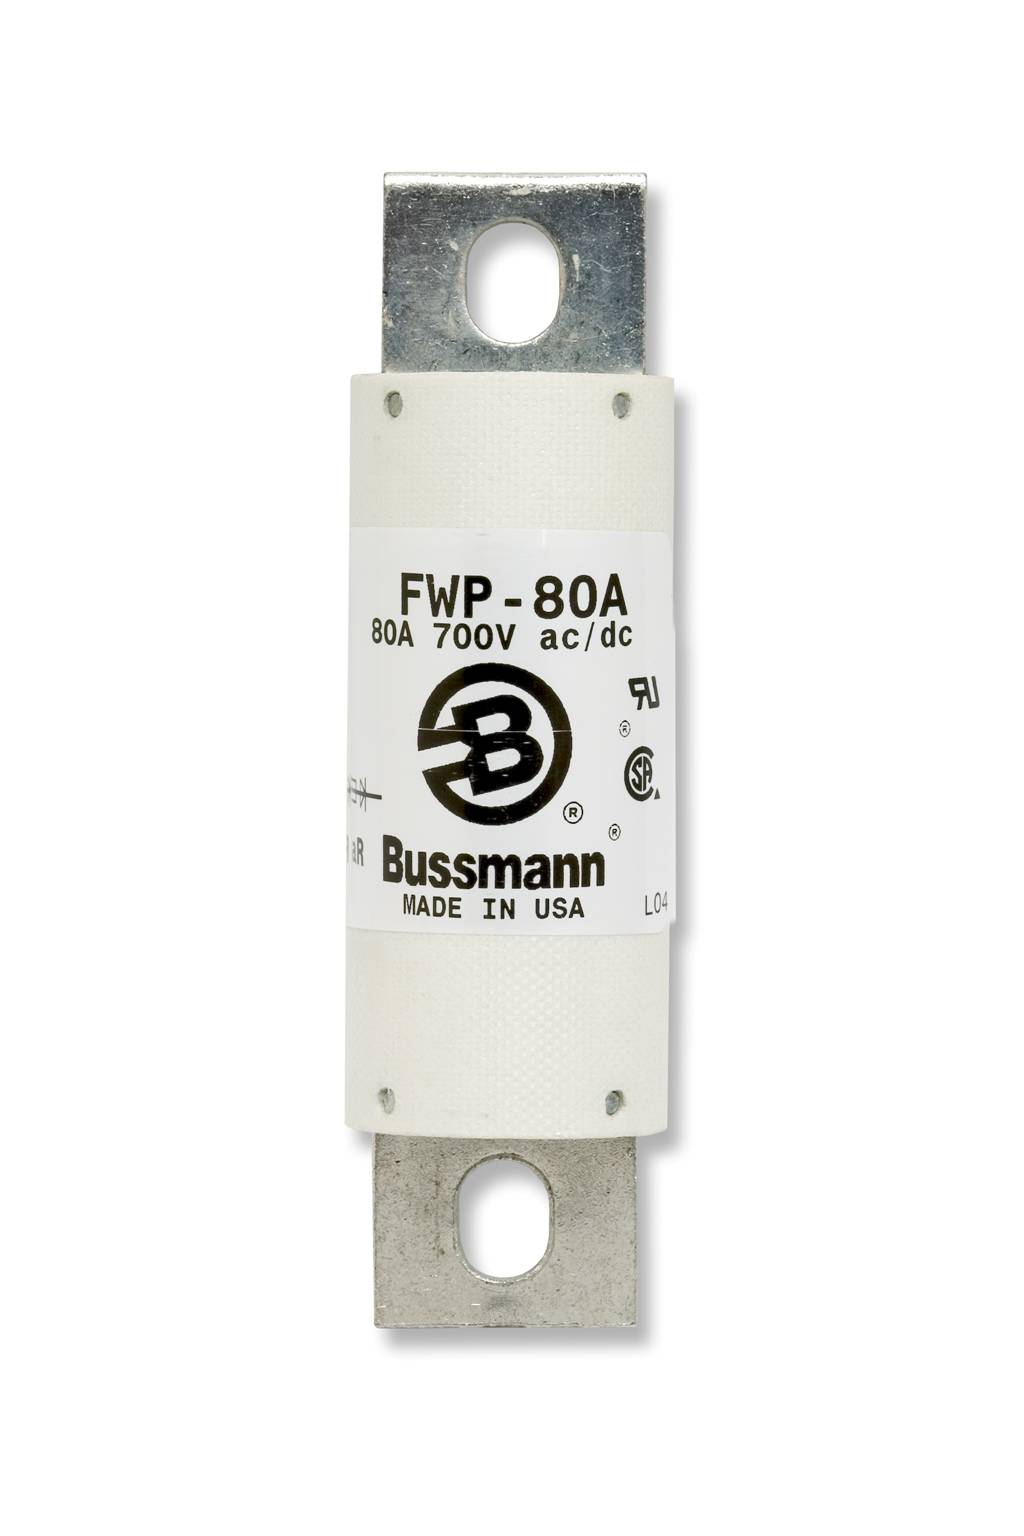 Part# FWP-80B  Manufacturer BUSSMANN  Part Type 700 Volt Fuse